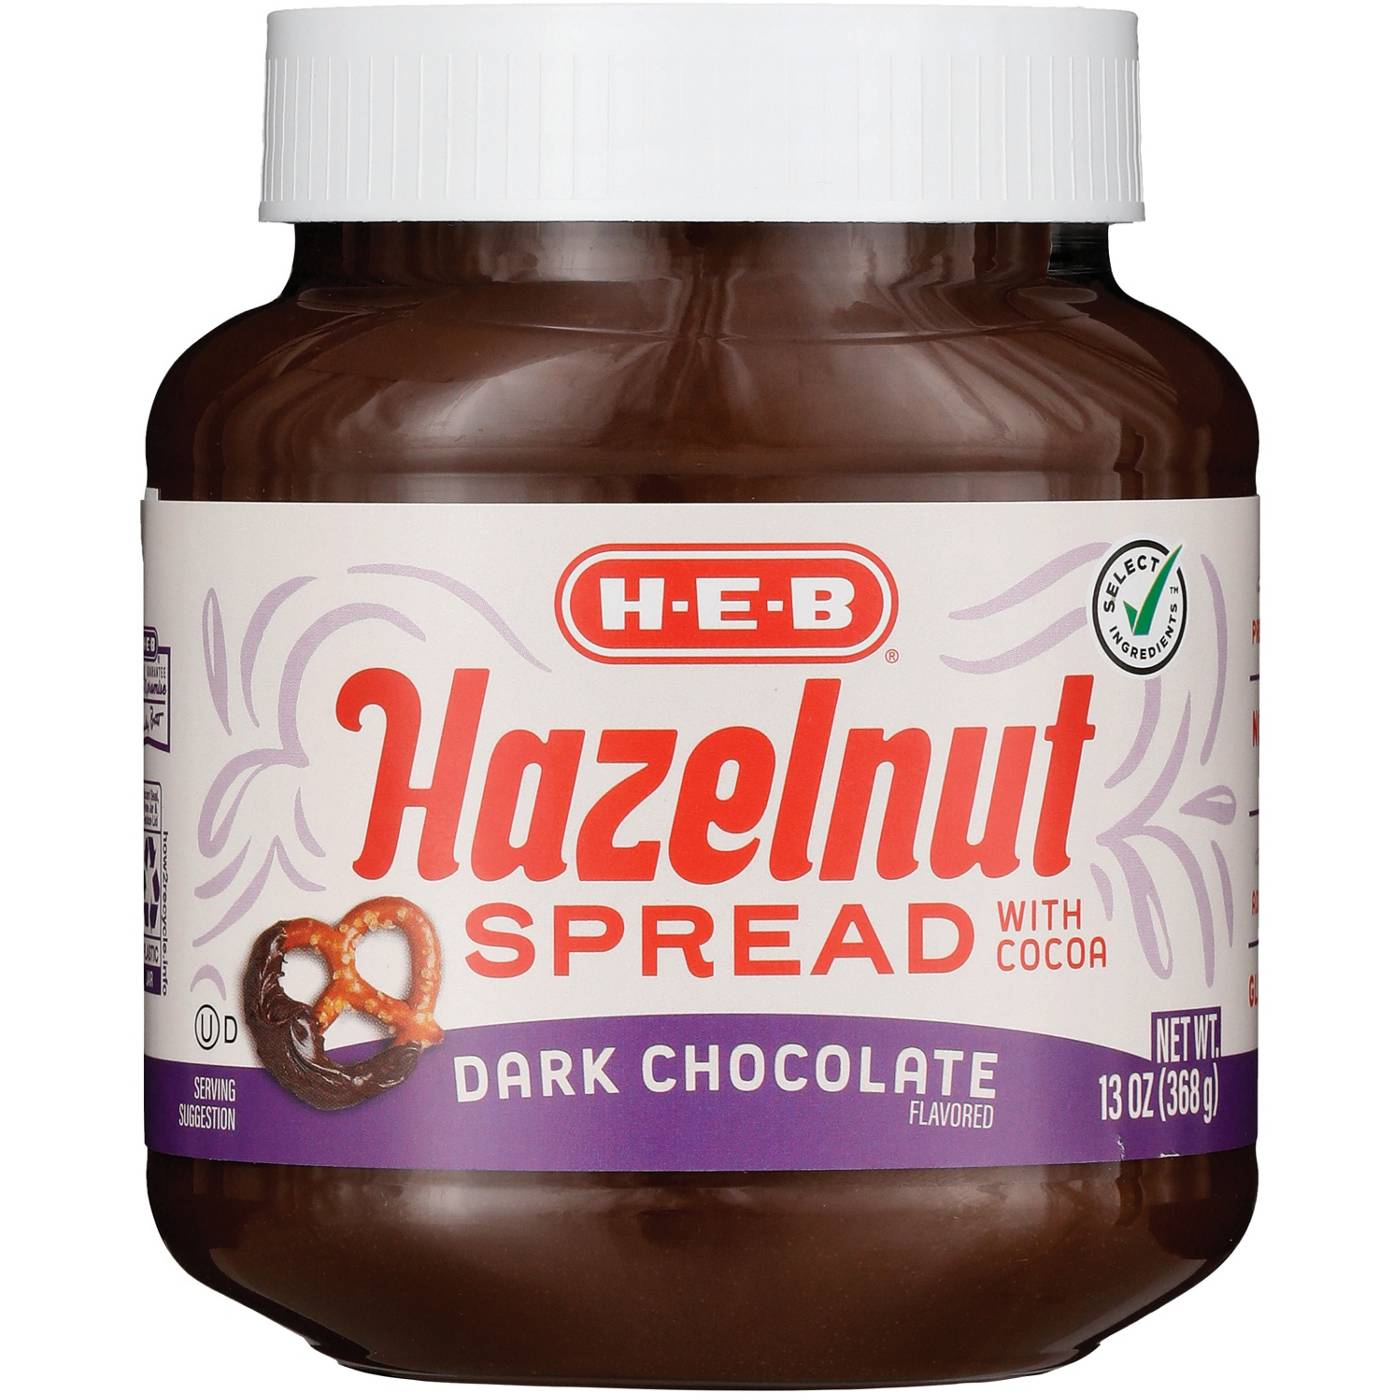 H-E-B Dark Chocolate Hazelnut Spread with Cocoa; image 1 of 2